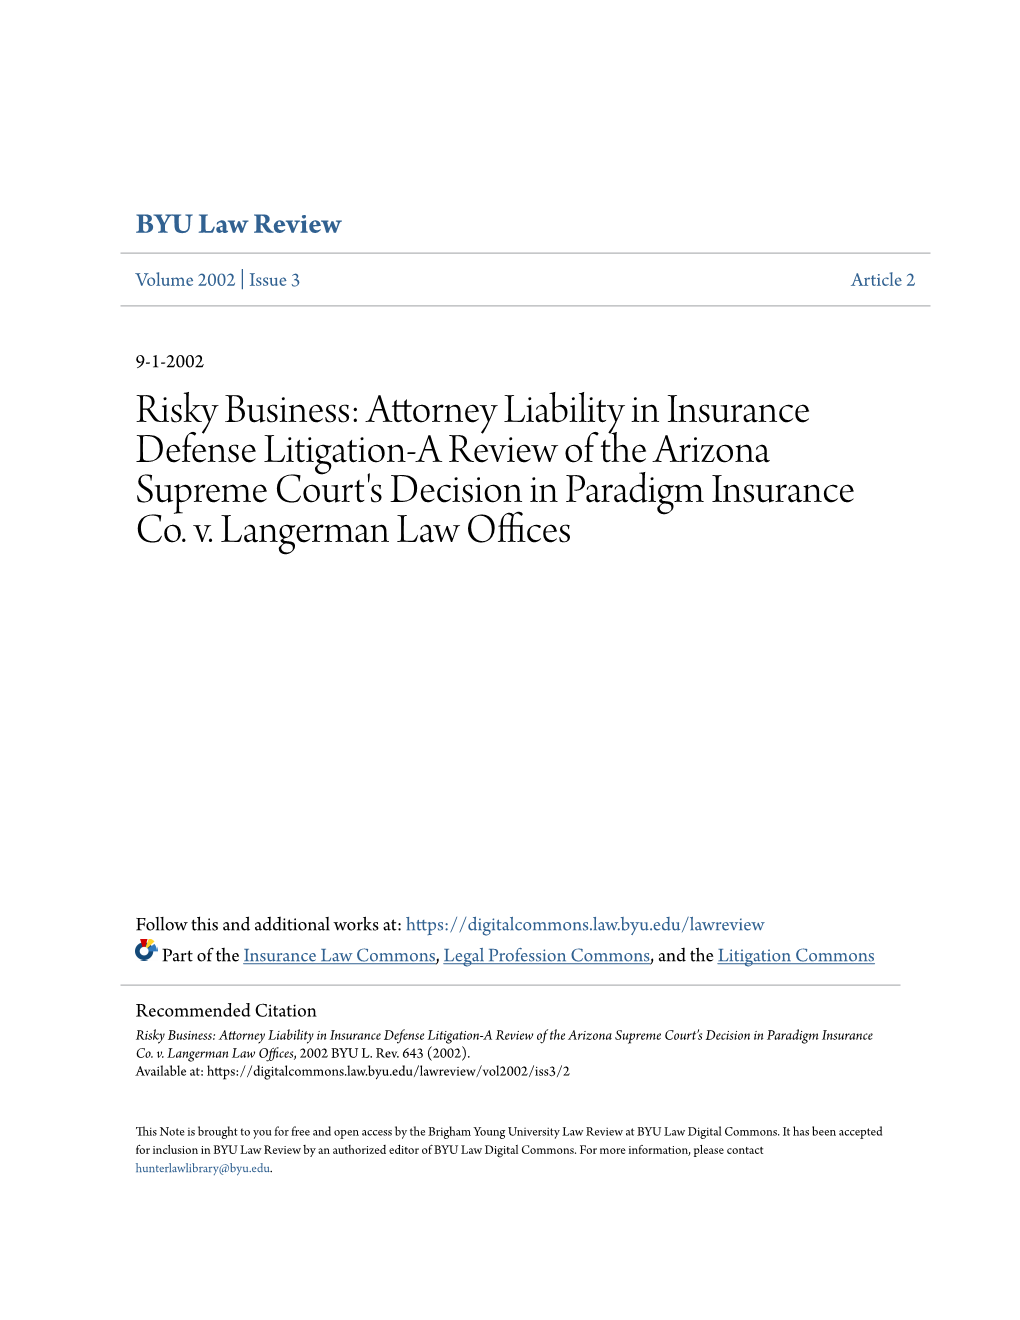 Attorney Liability in Insurance Defense Litigation-A Review of the Arizona Supreme Court's Decision in Paradigm Insurance Co